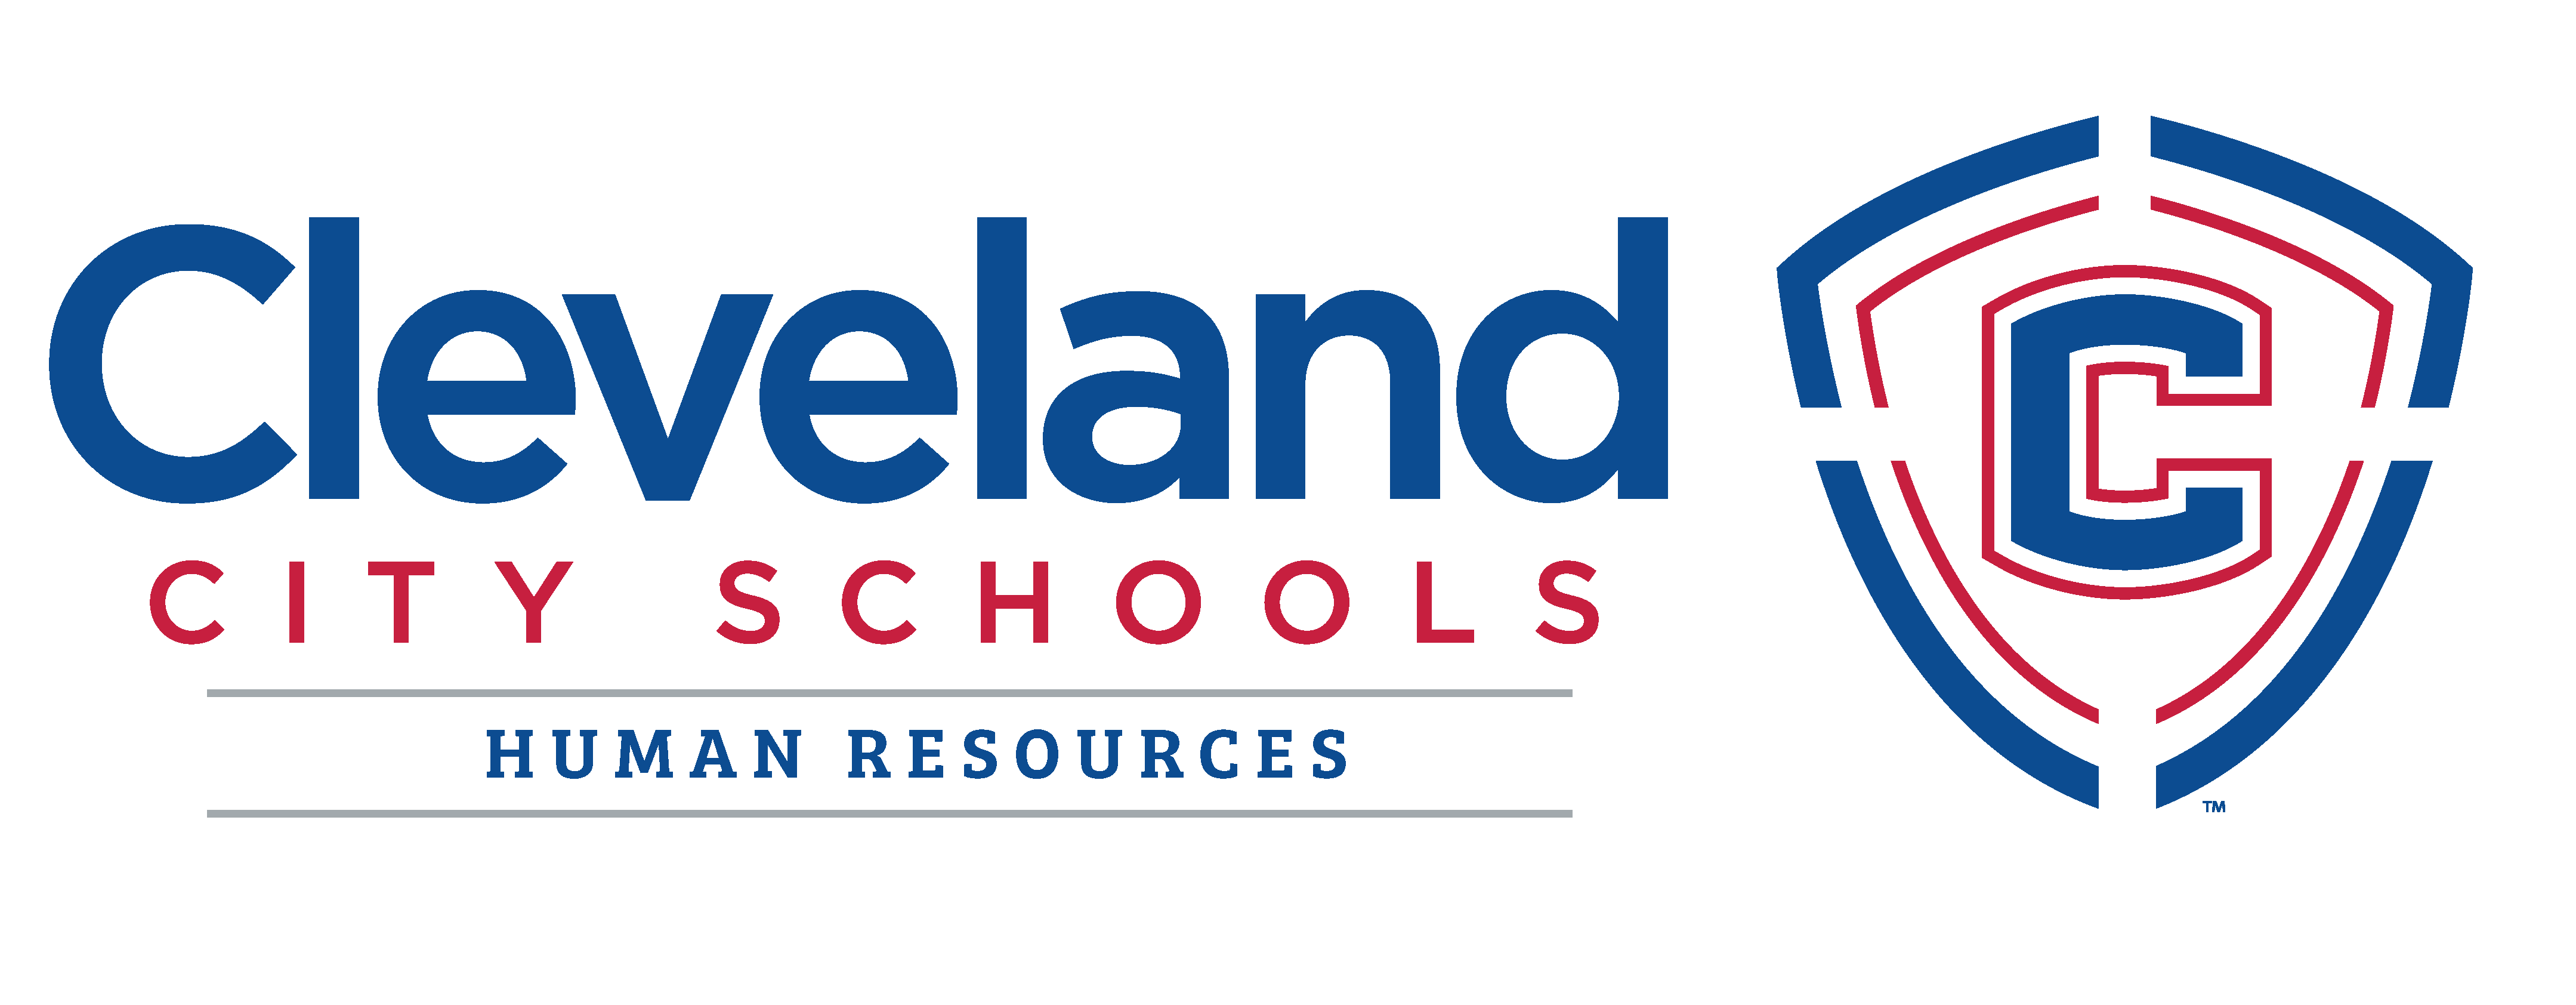 Human Resources Cleveland City Schools